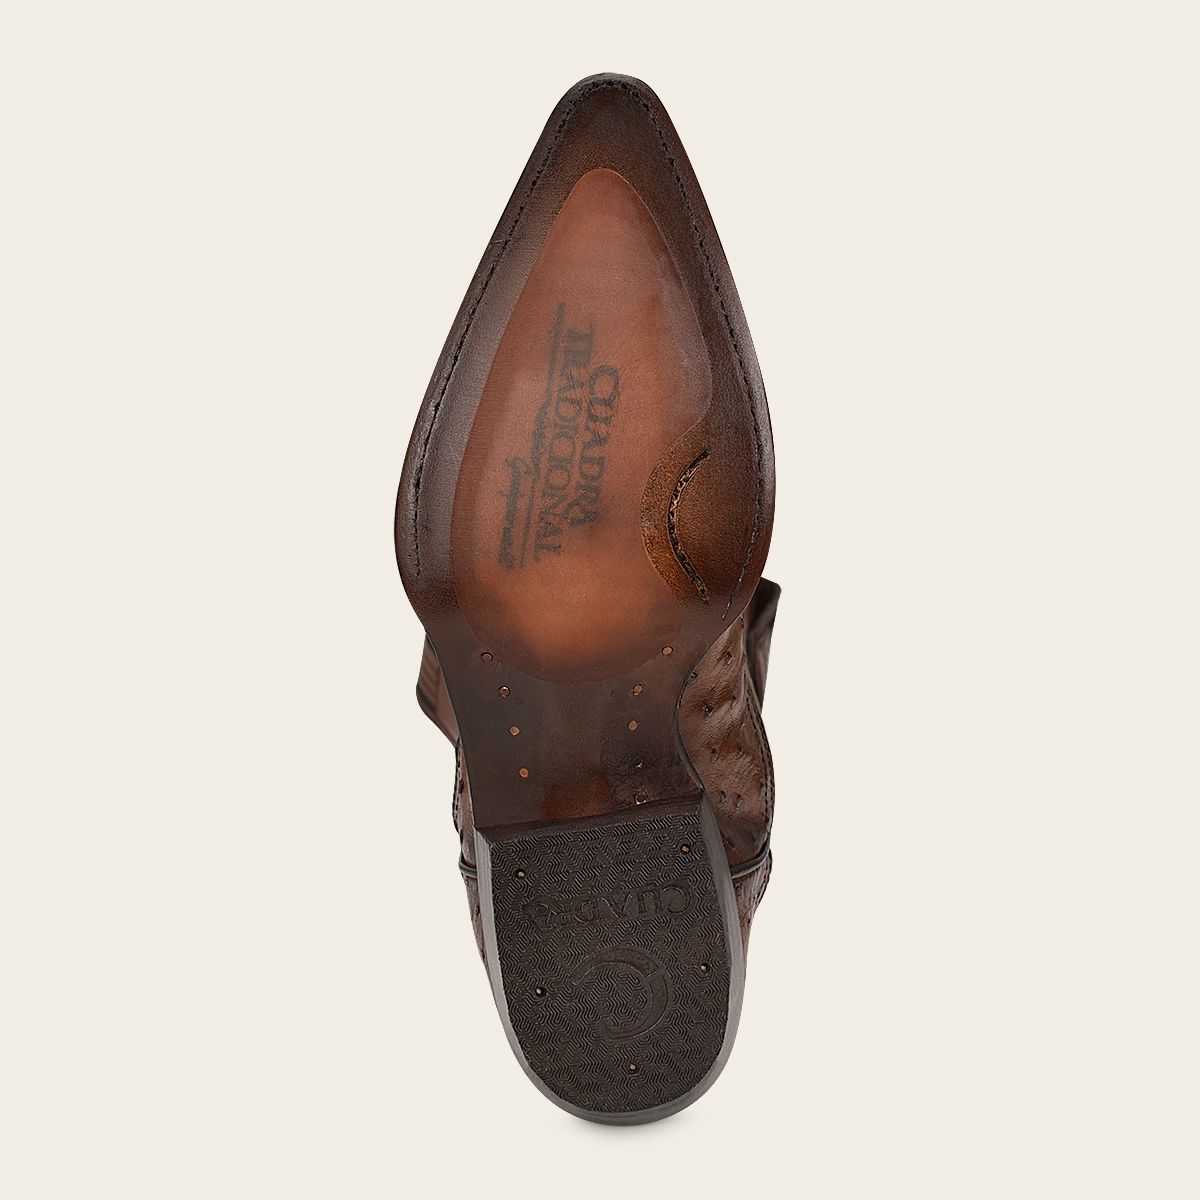 B22PA1 - Cuadra Honey casual cowboy ostrich leather boots for men-CUADRA-Kuet-Cuadra-Boots